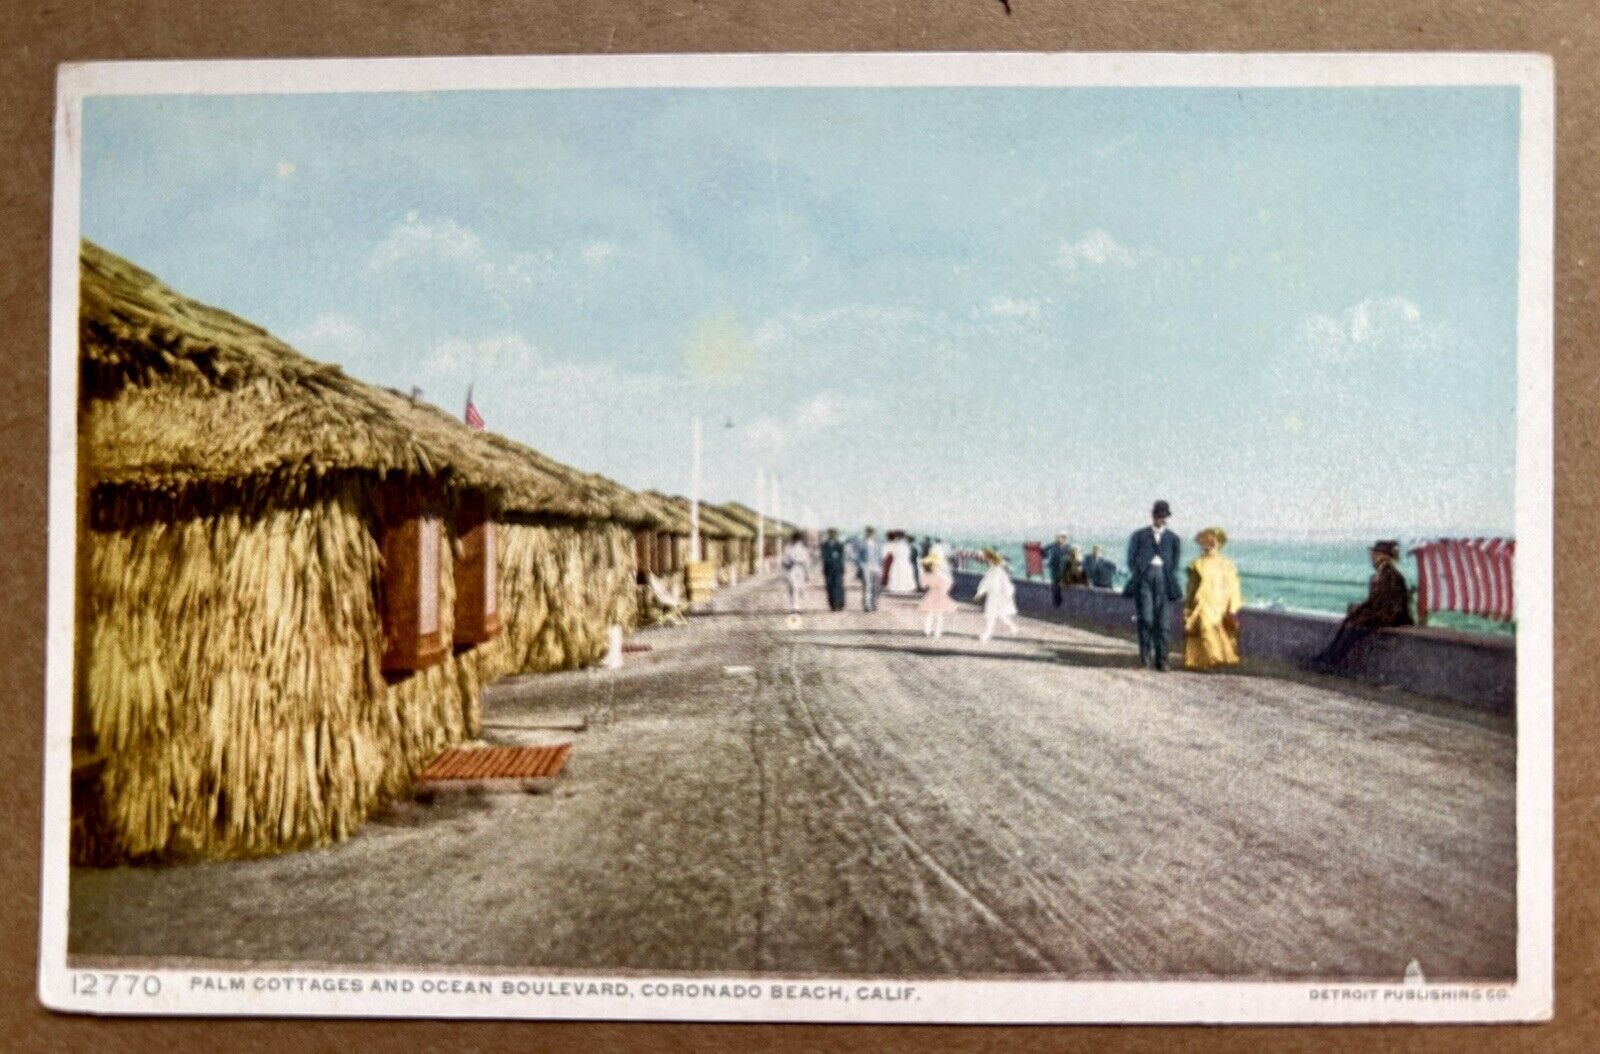 Palm Court cottages and Ocean Blvd., Coronado Beach California postcard